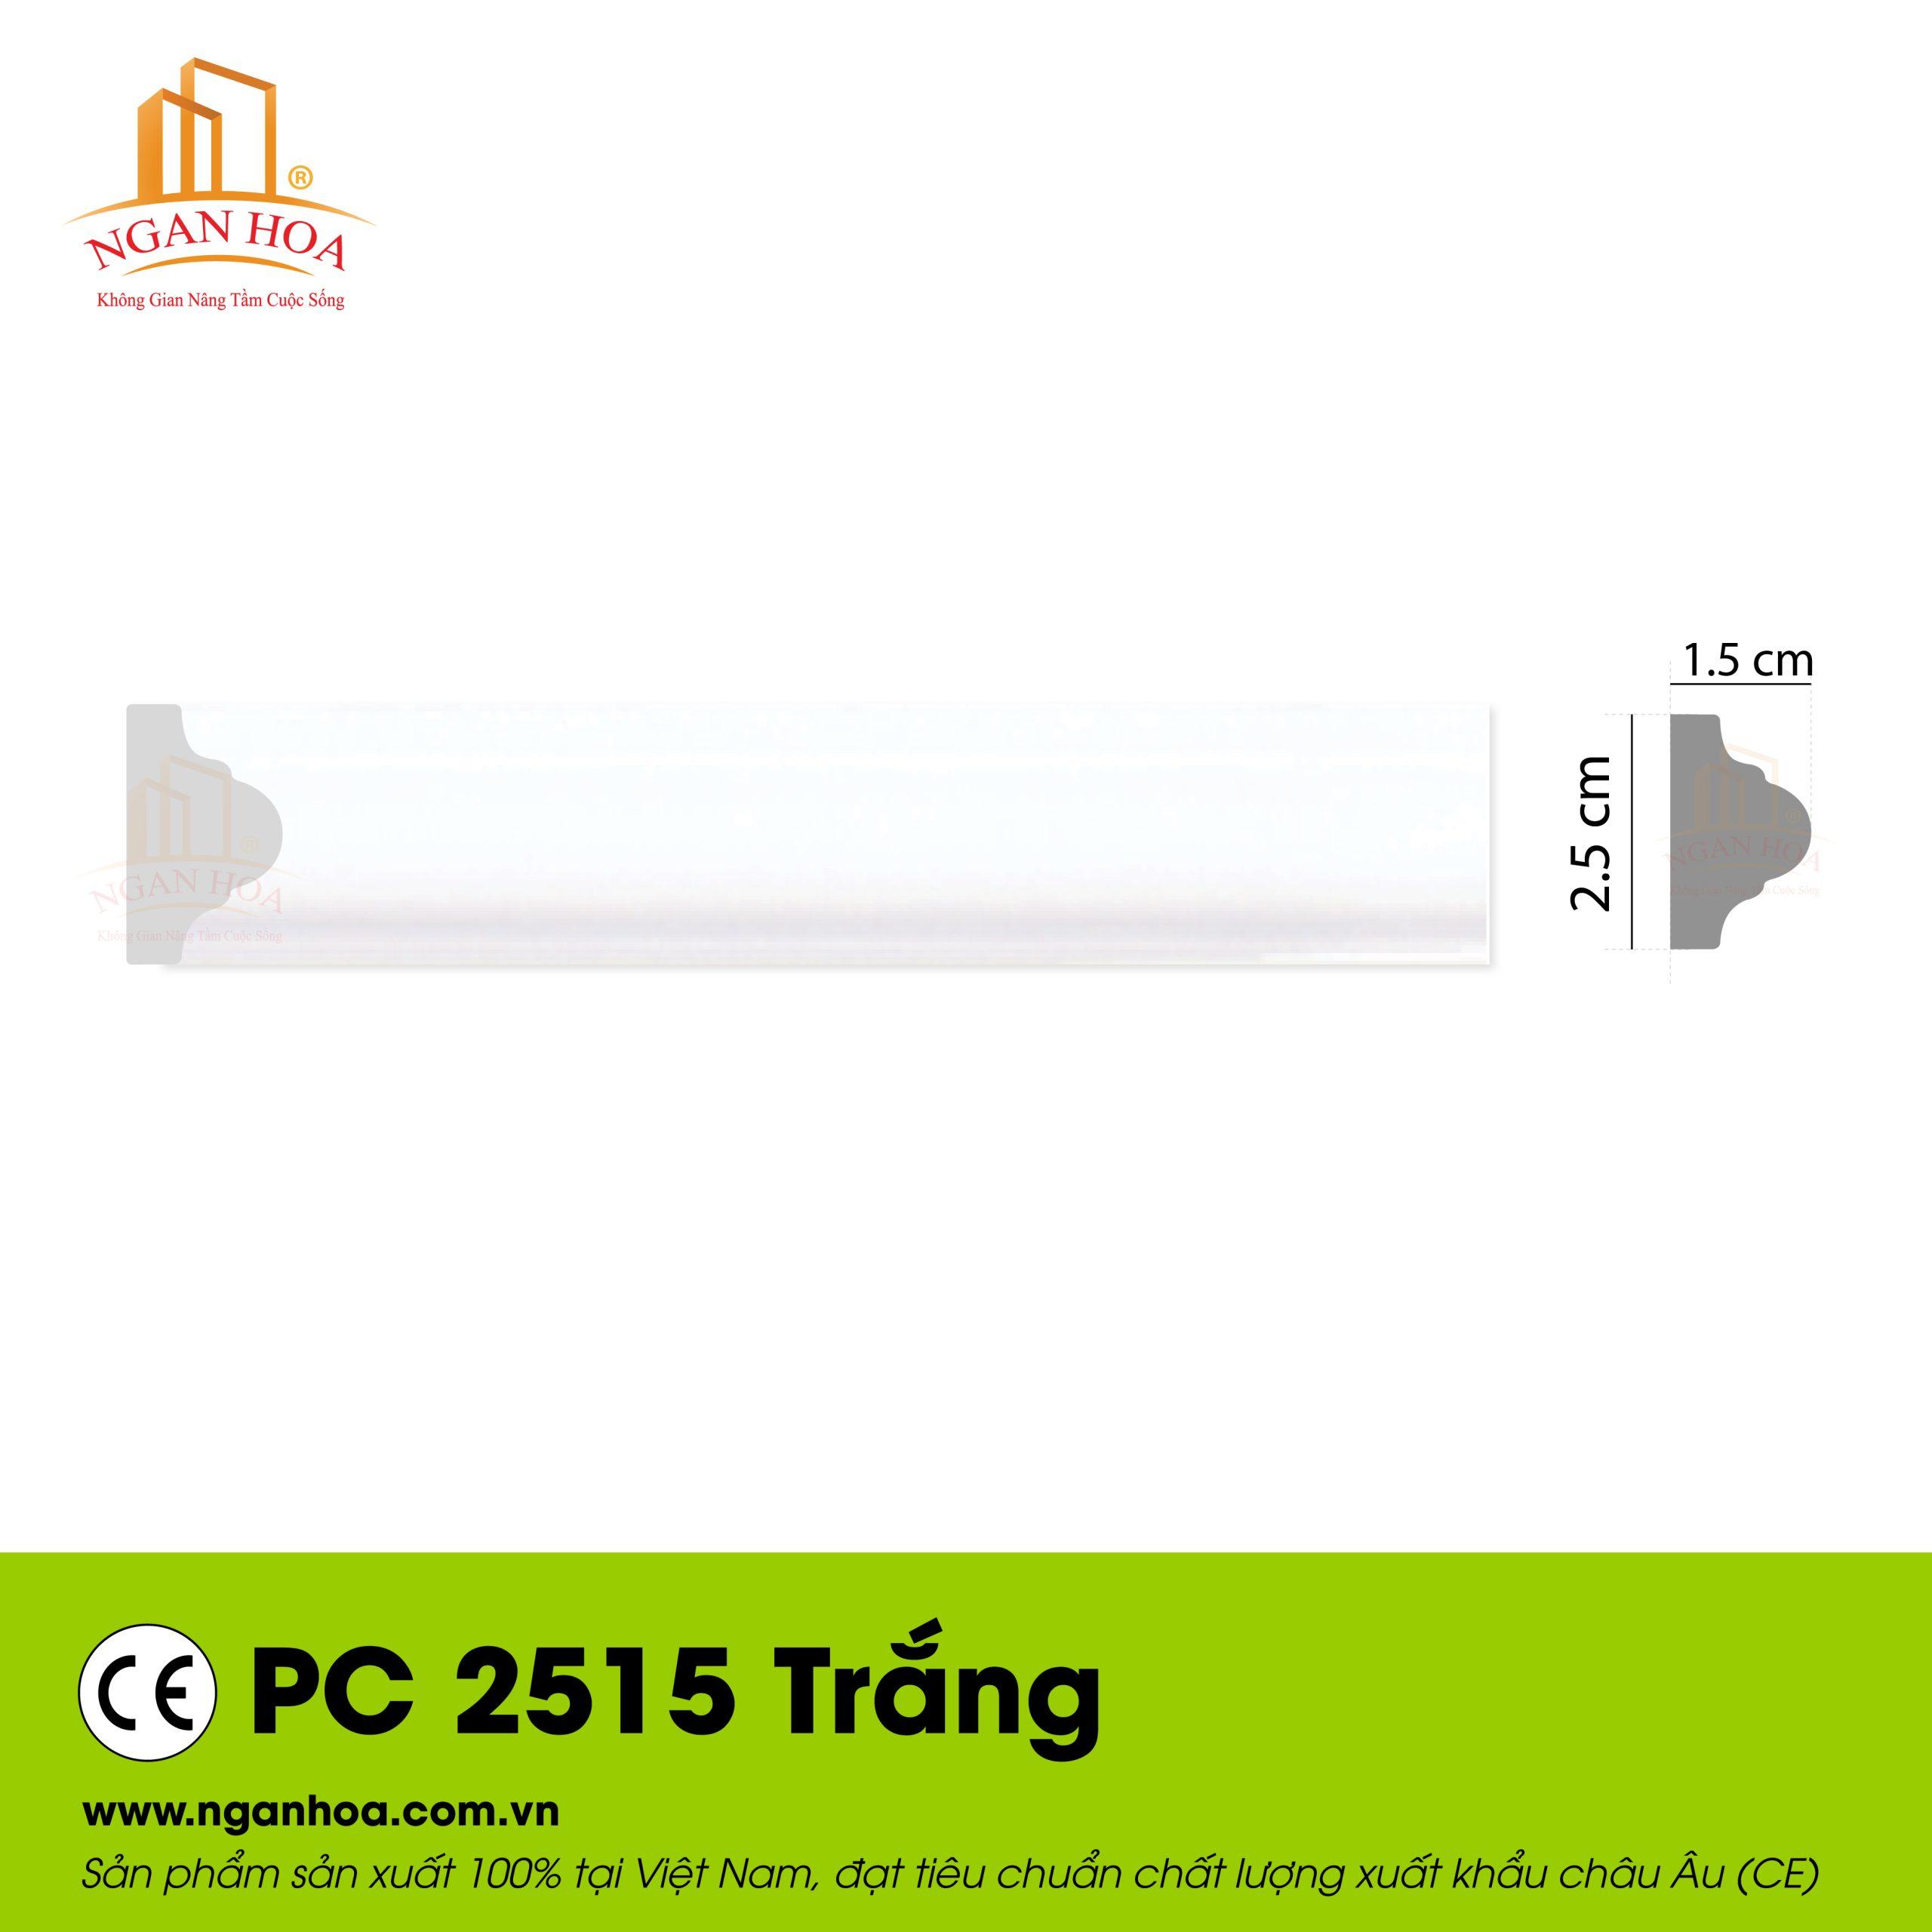 PC 2515 Trang scaled